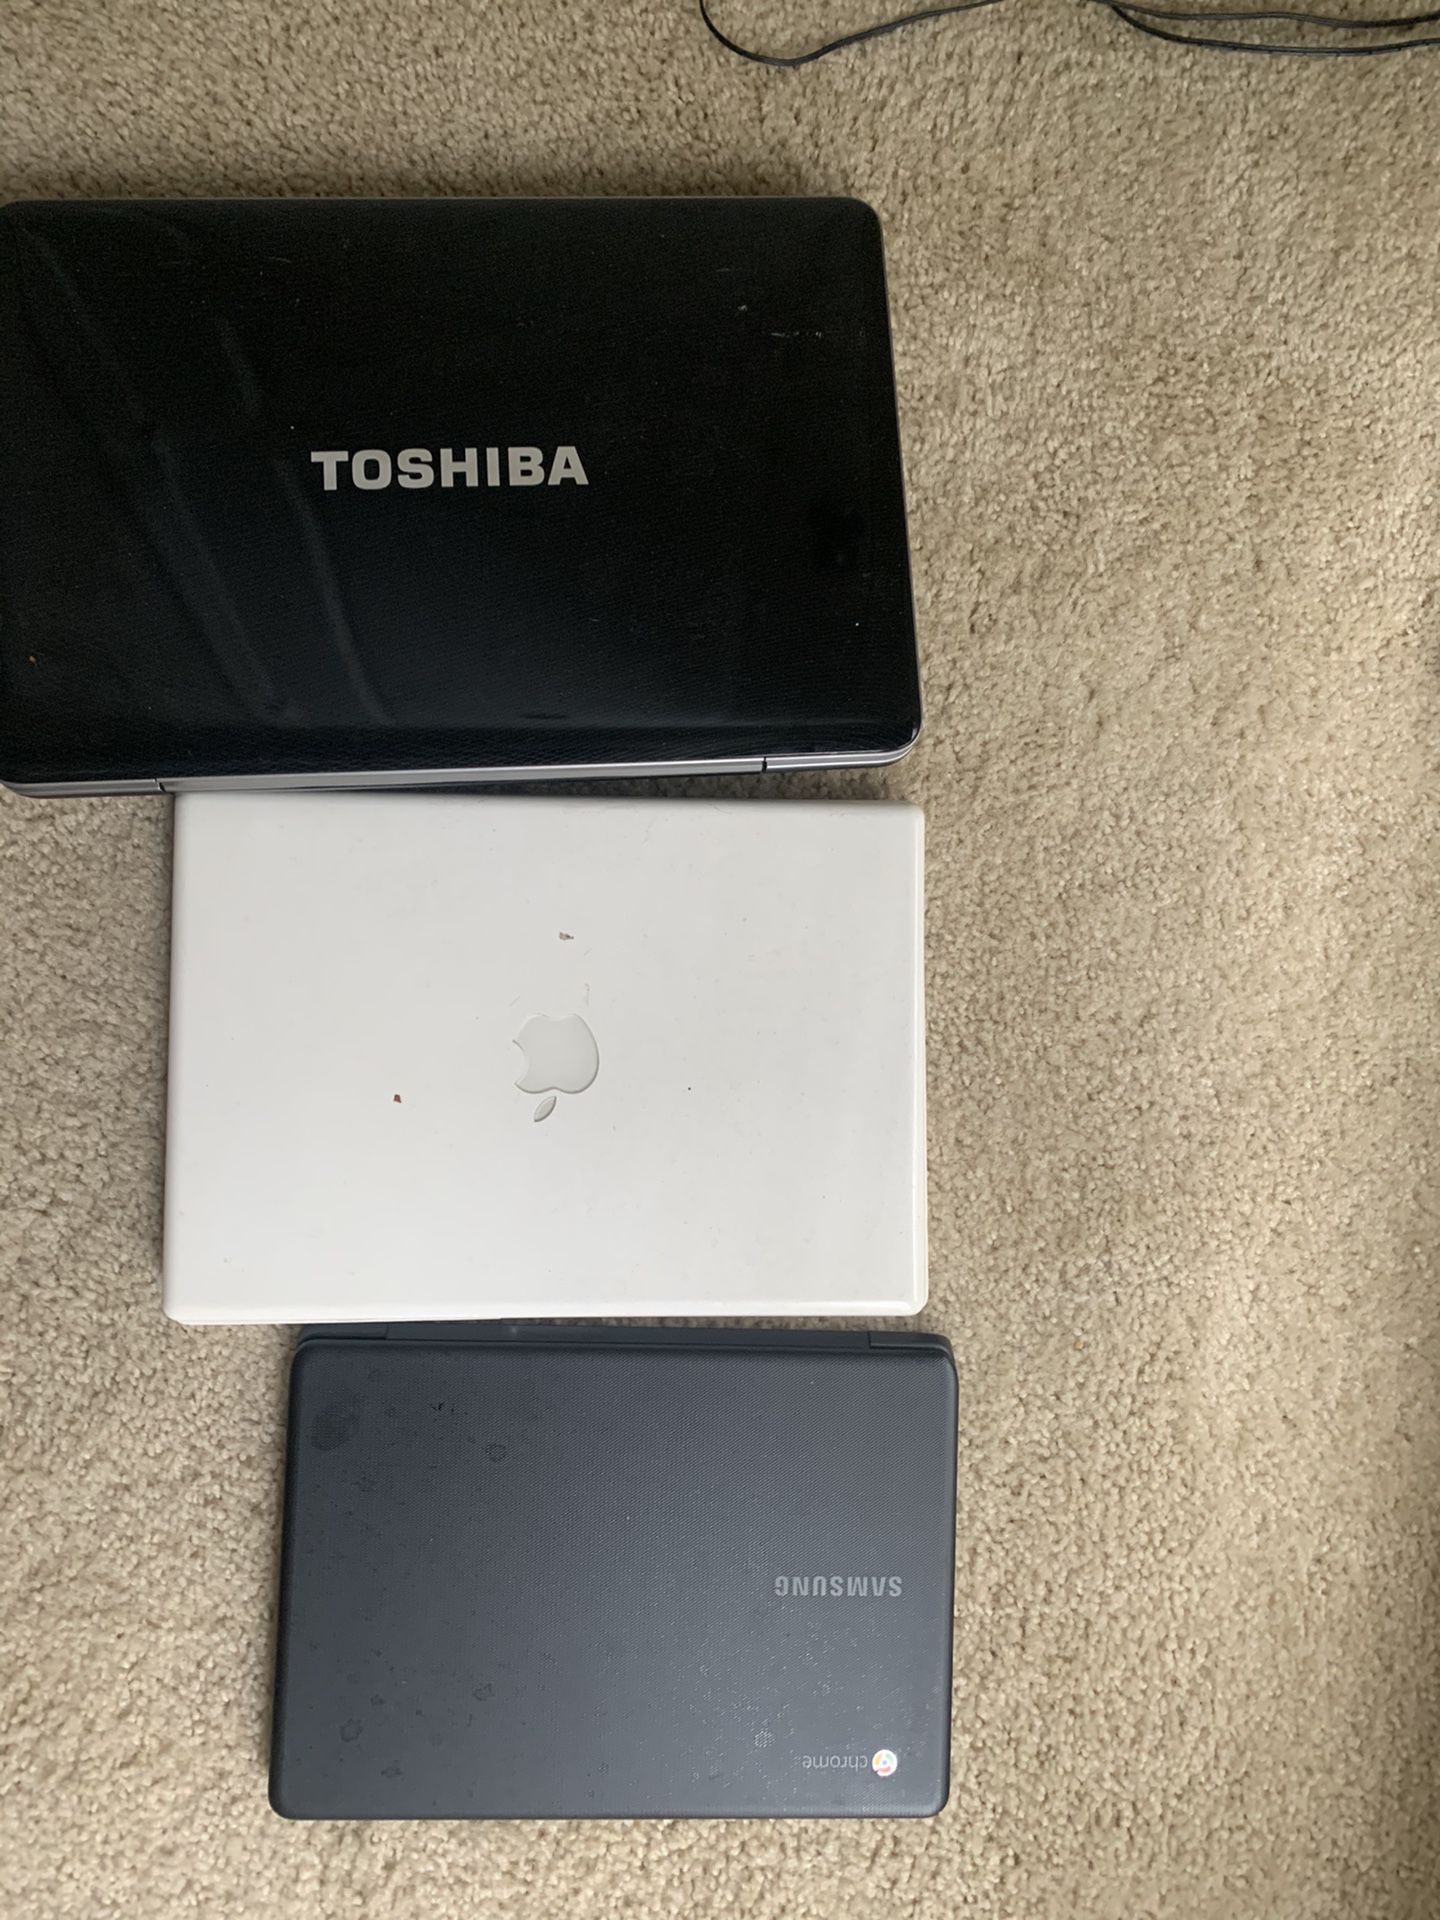 3 laptops